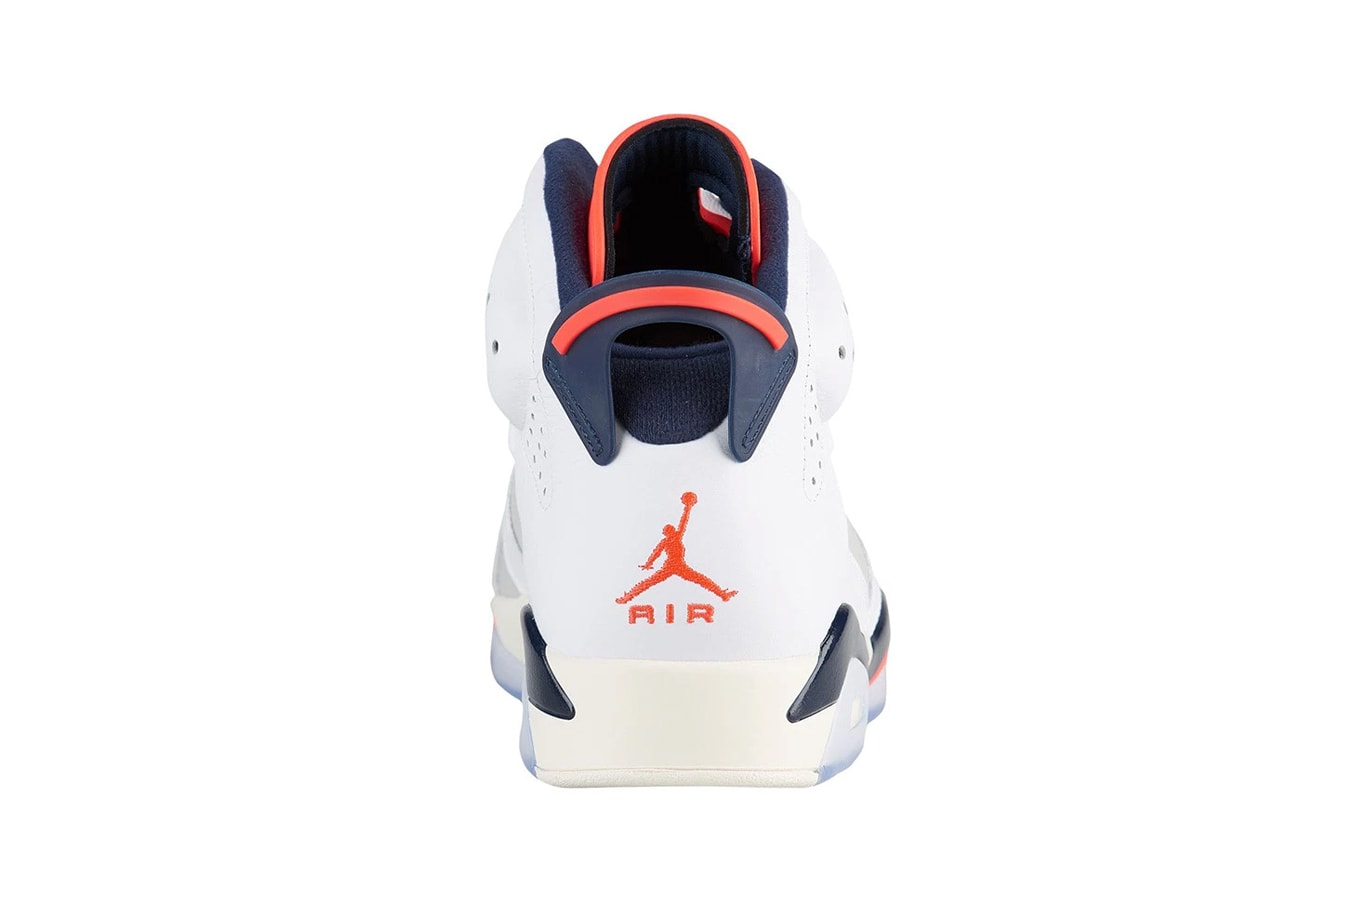 air jordan 6 tinker hatfield white infrared 23 release date sneaker price october 6 2018 drop sale sell buy blue navyorange red